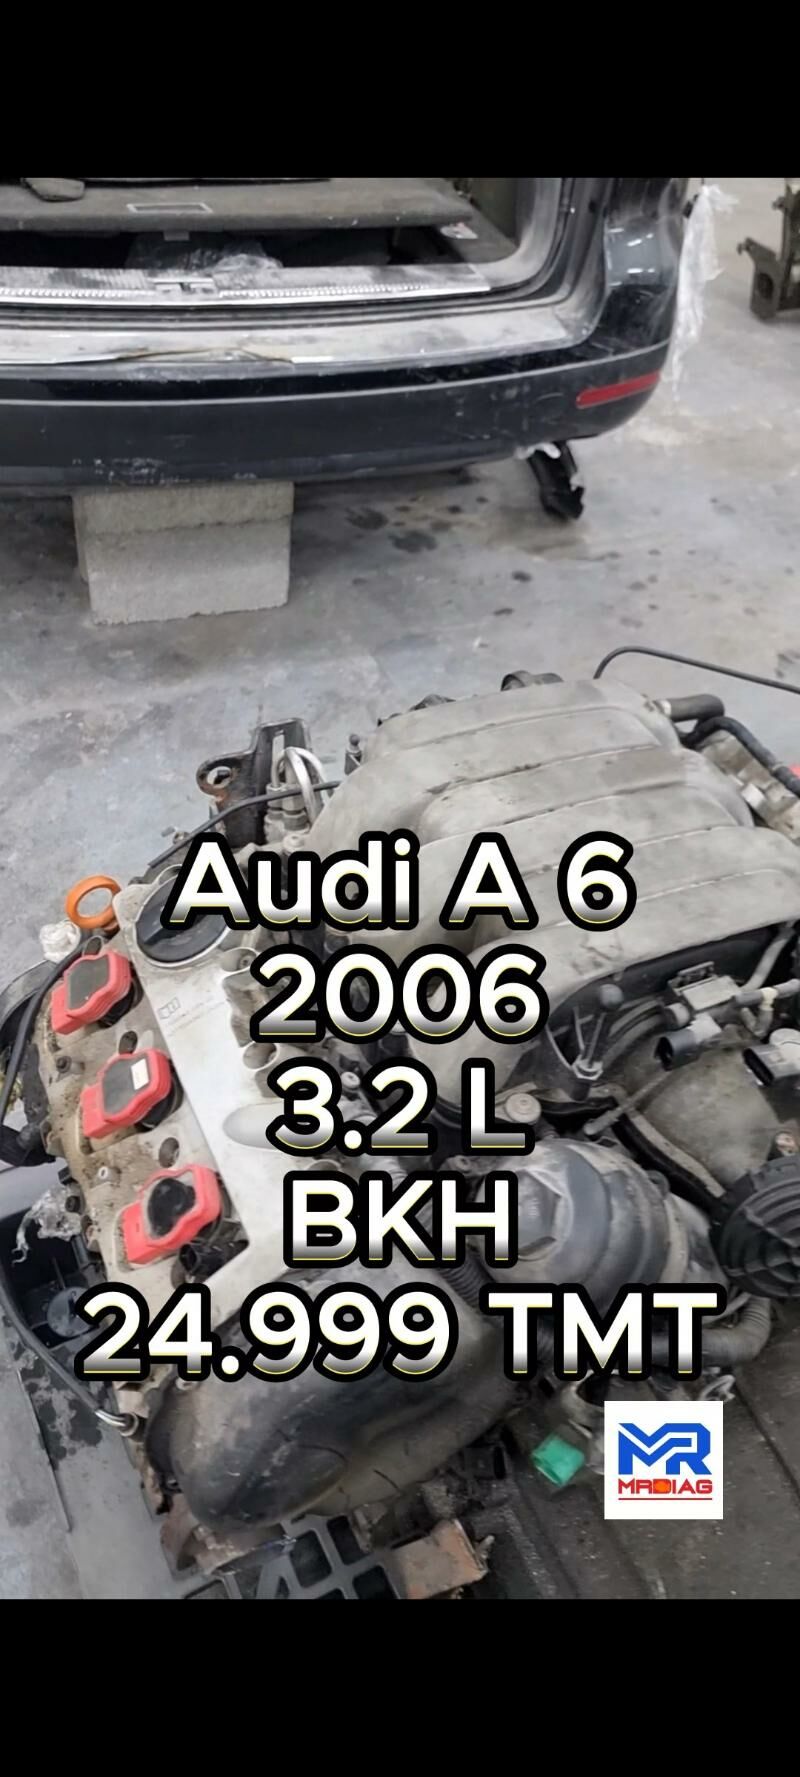 Моторы BMW,Audi,VW 13 999 TMT - 6 мкр - img 3